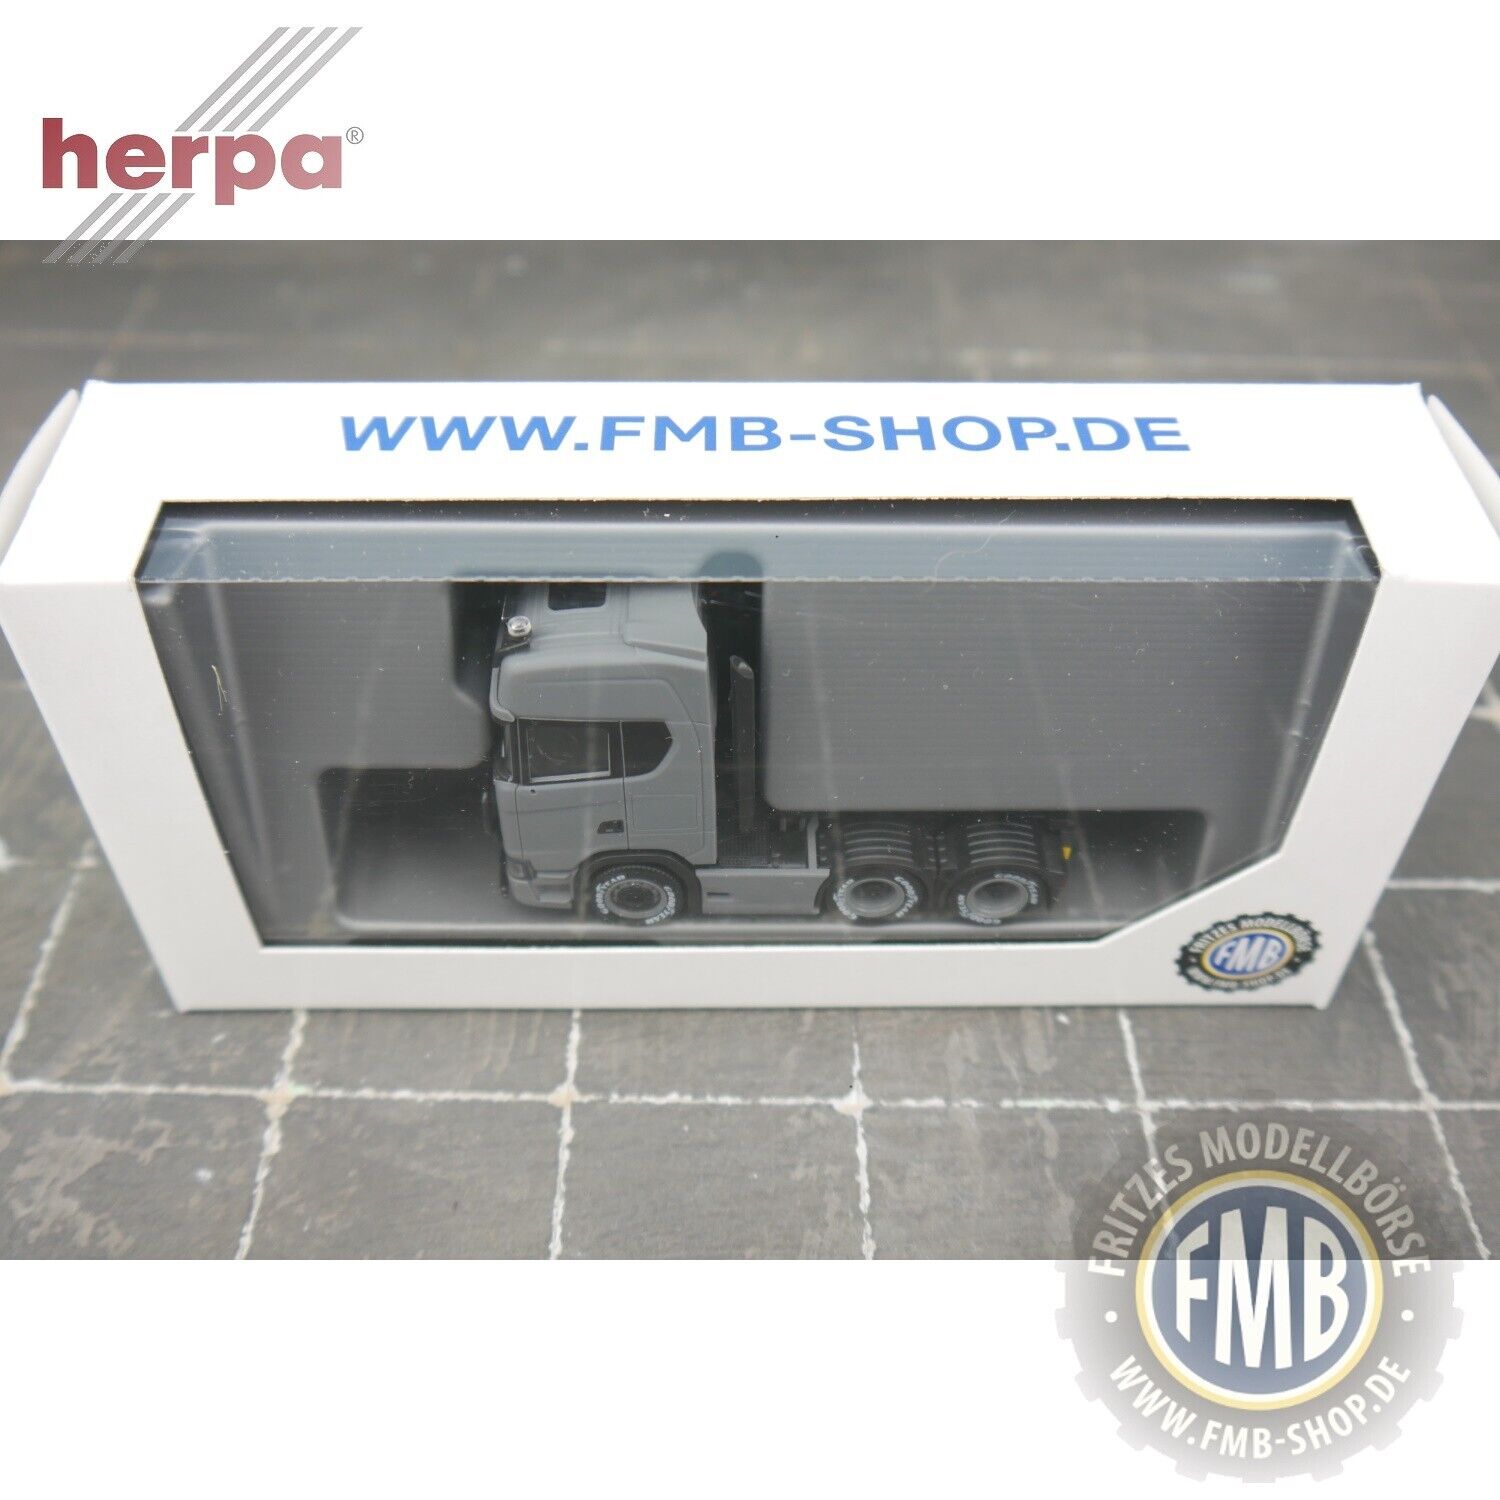 Herpa H0 1/87 -Scania CS Highline 6x2 Zugmaschine MATT Nardograu